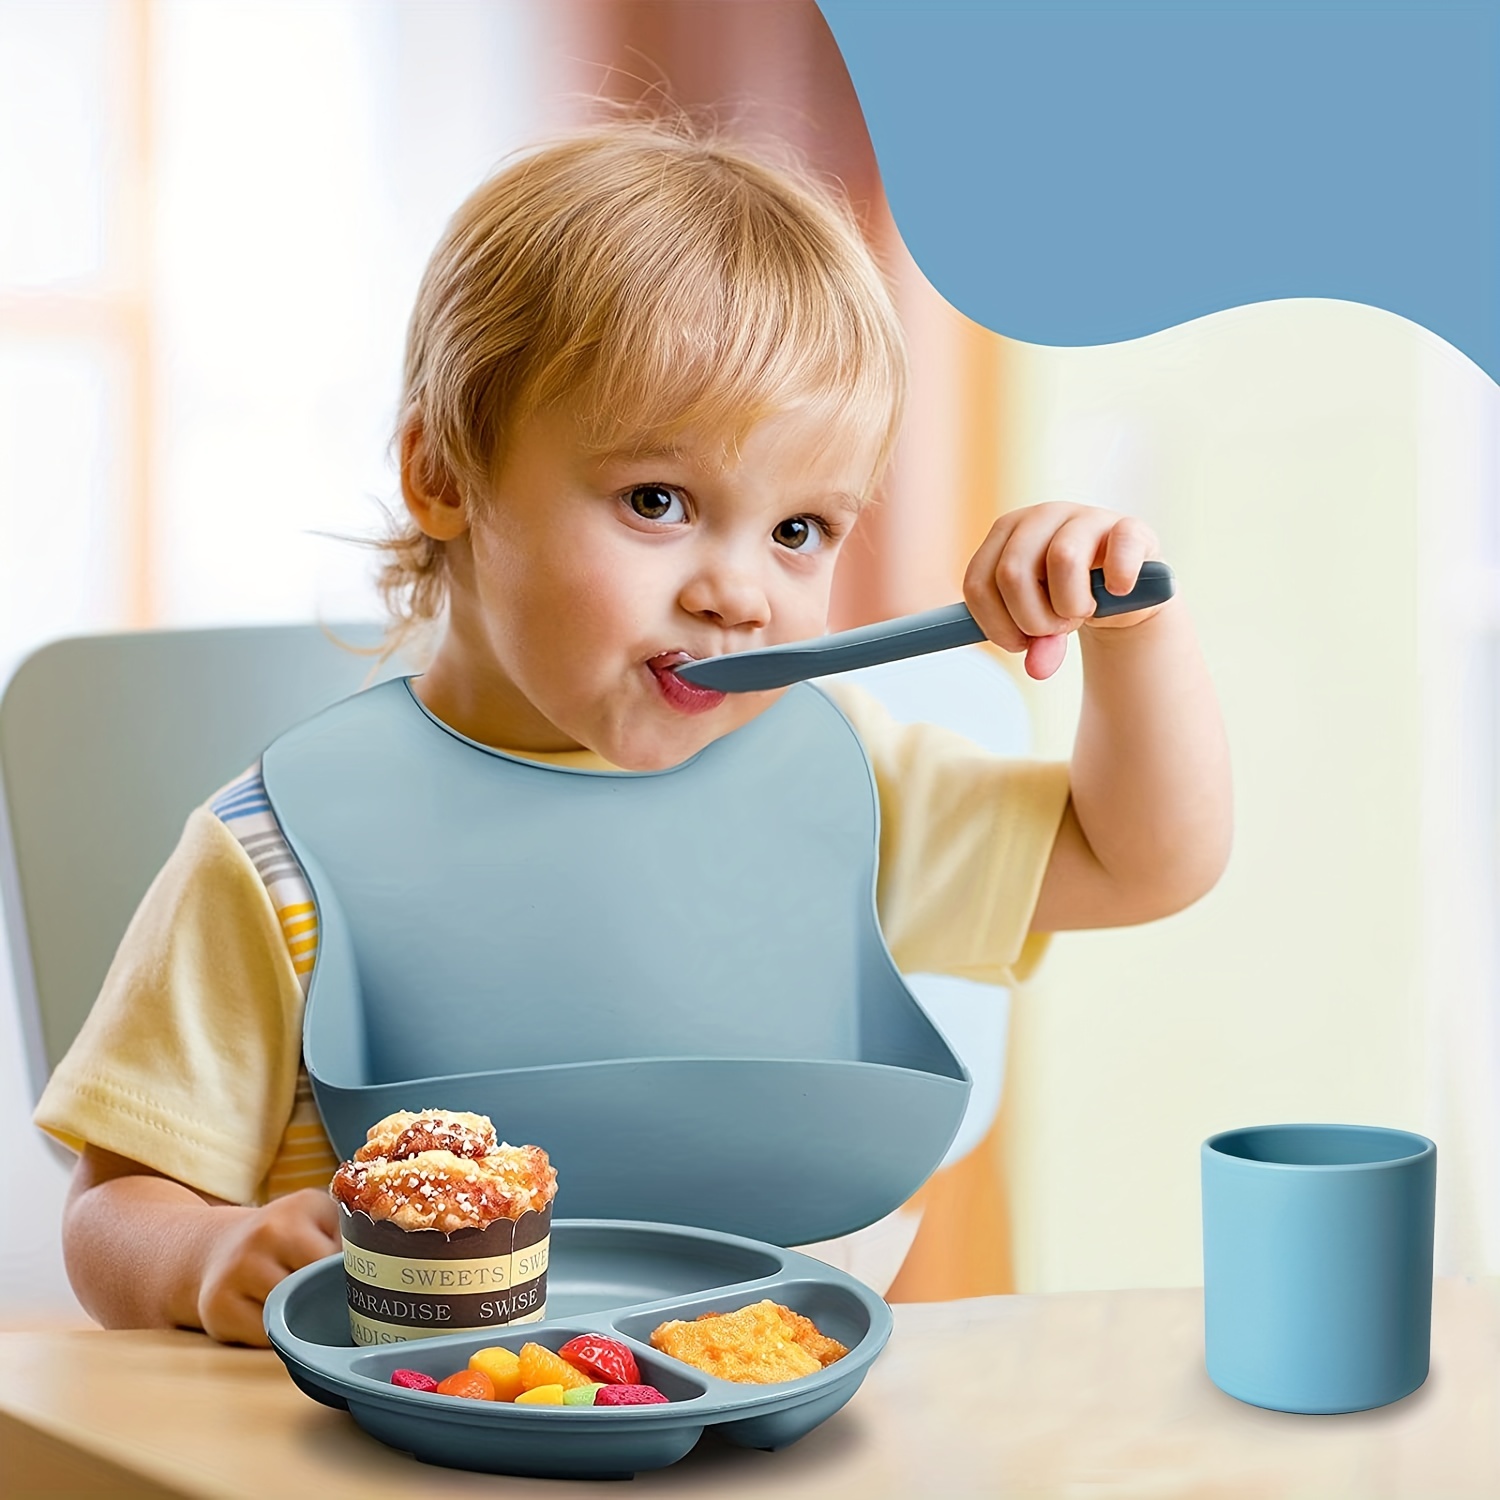 Baby Feeding Utensils Set, 7-Piece Silicone Toddler Supplies - Adjustable